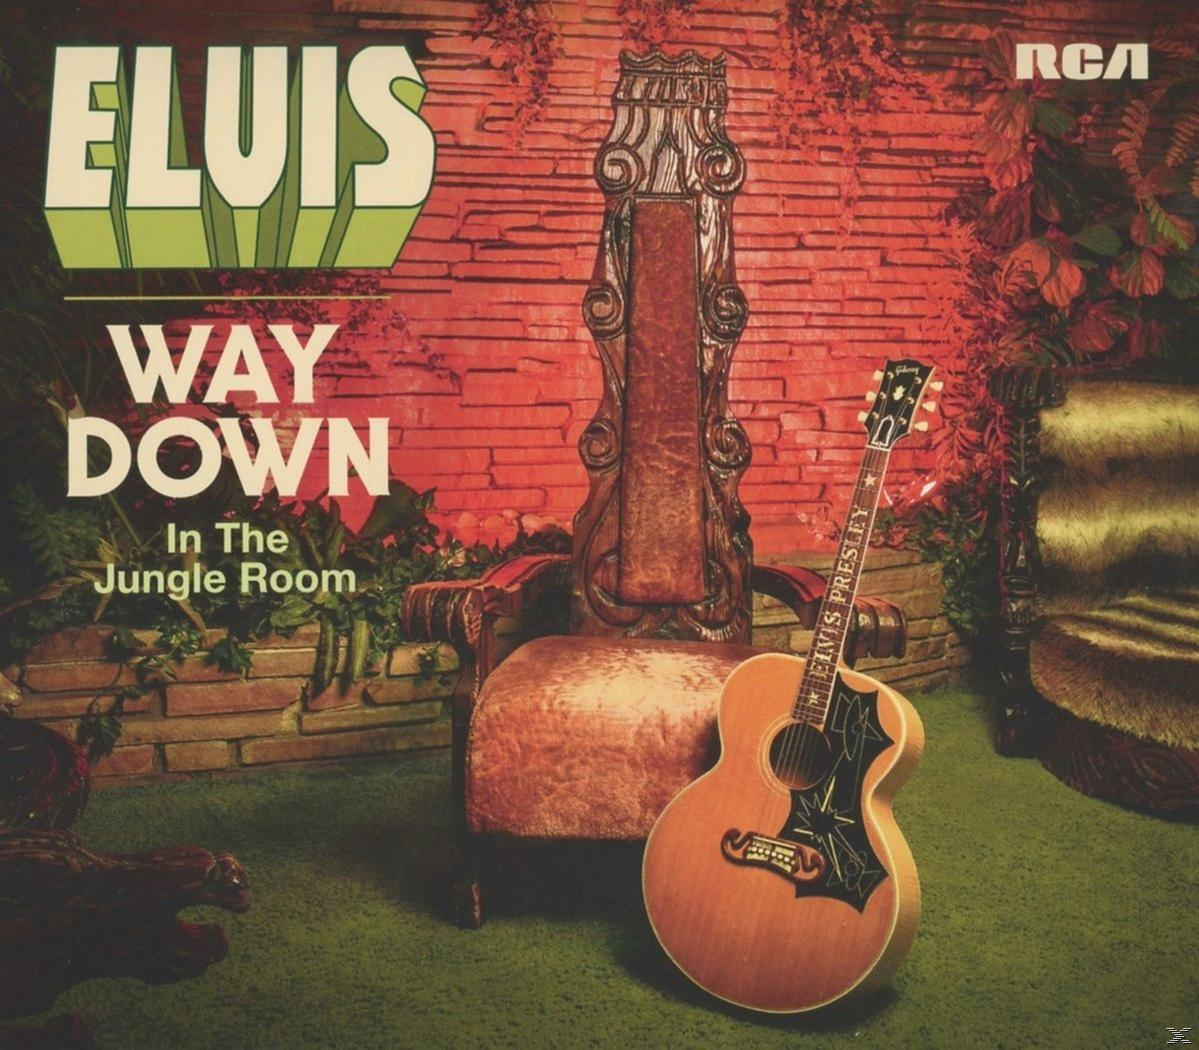 Elvis Presley - Way Down the (CD) - Room in Jungle